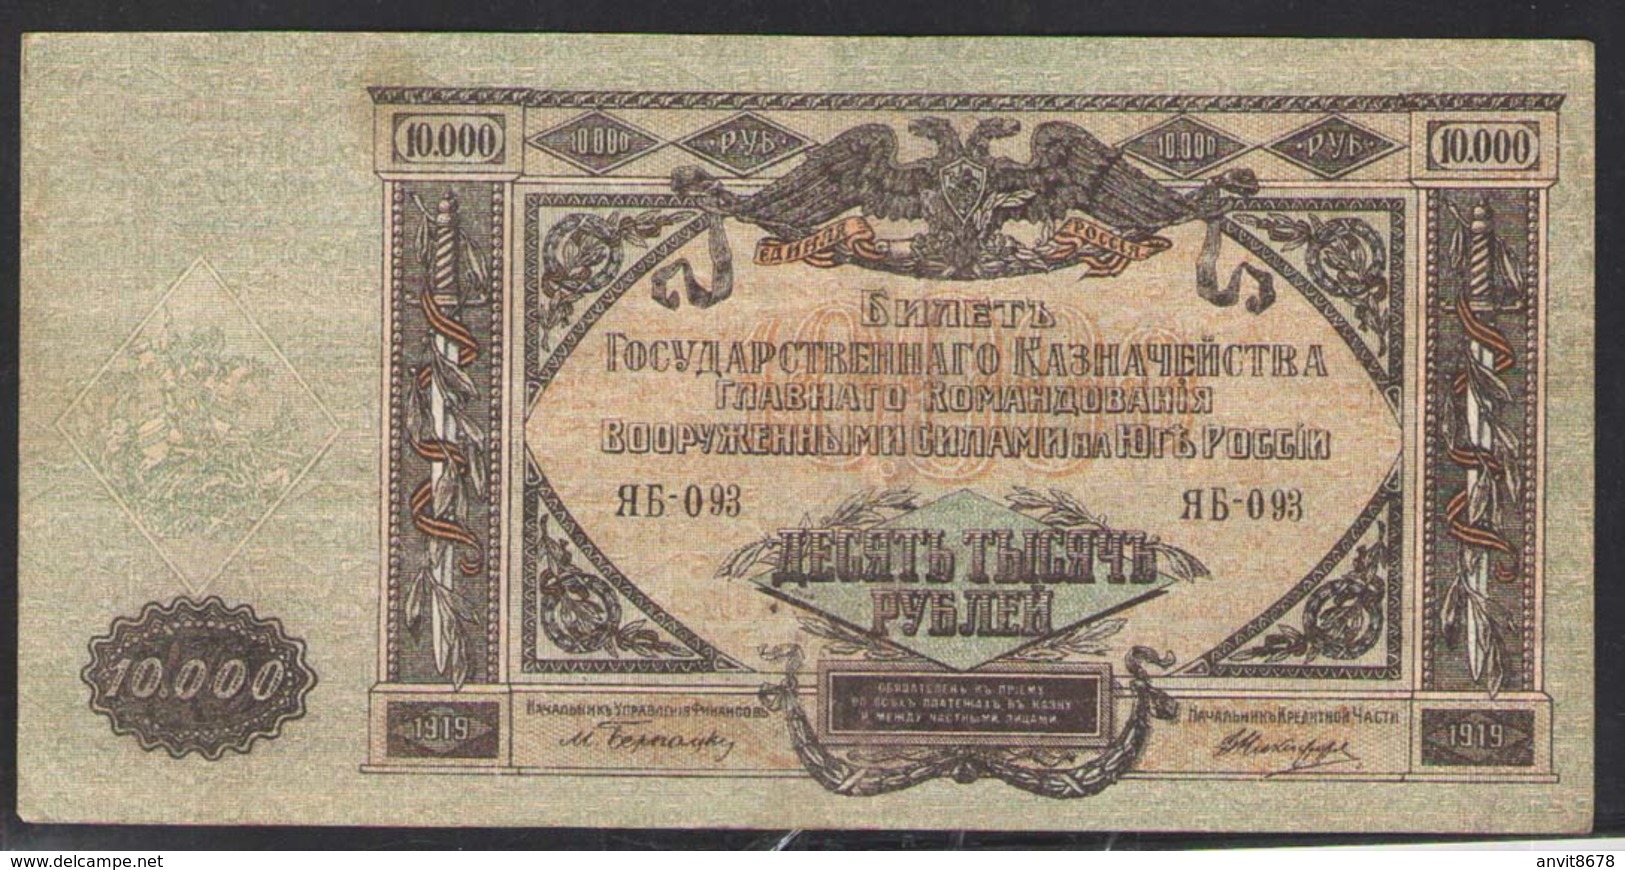 10000 руб   СЕРИЯ ЯБ-093  1919 - Russia